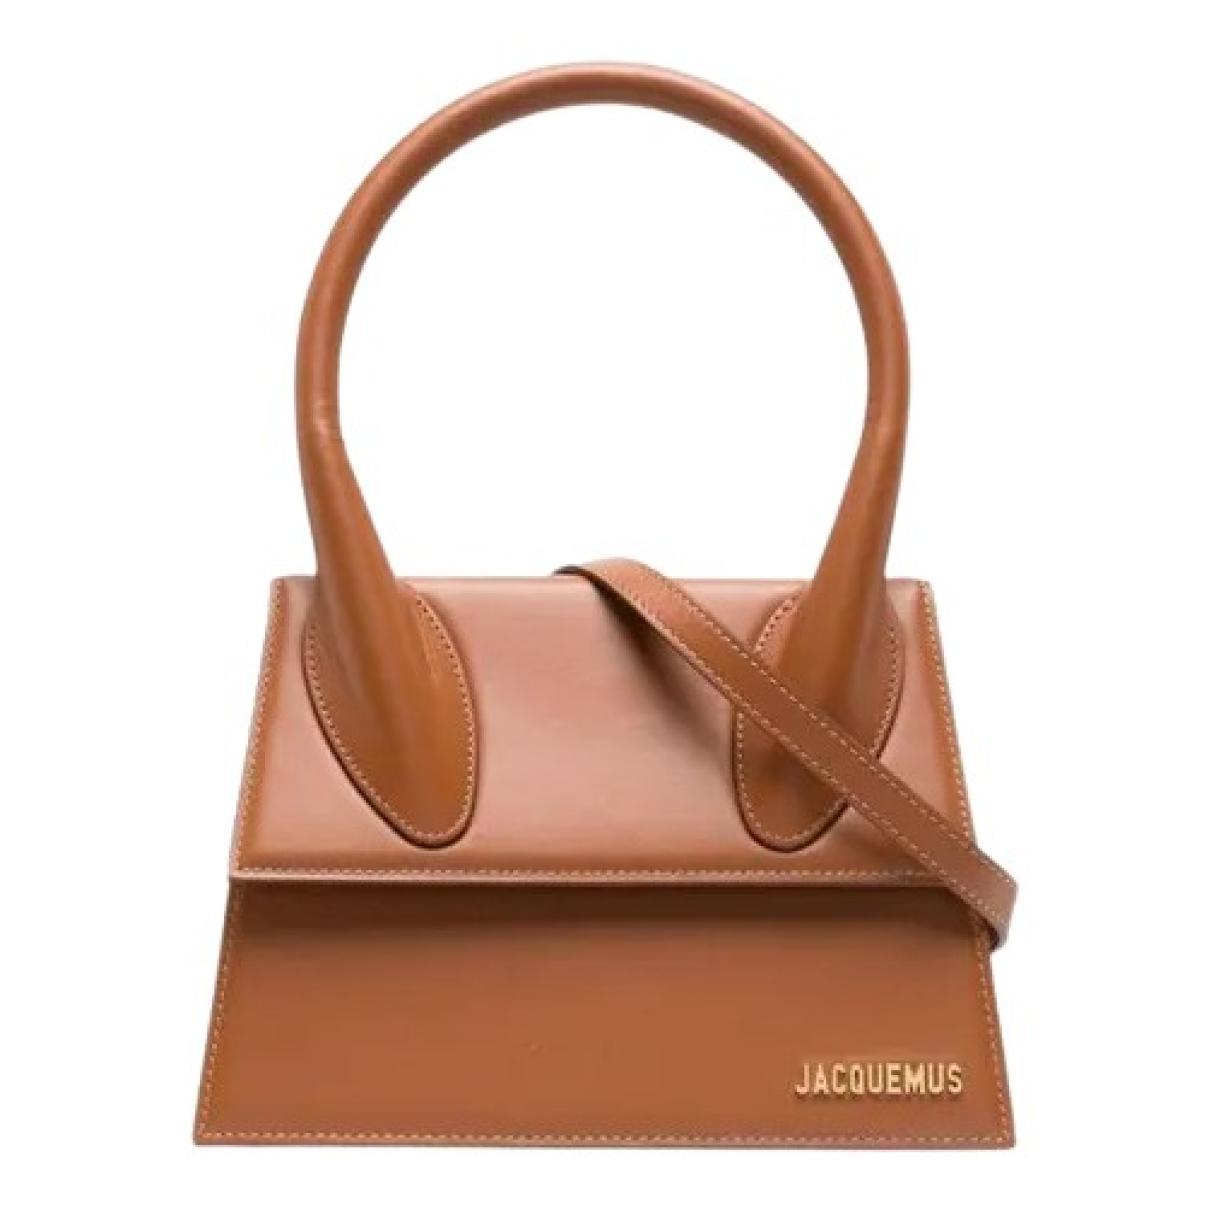 Chiquito leather handbag - 1